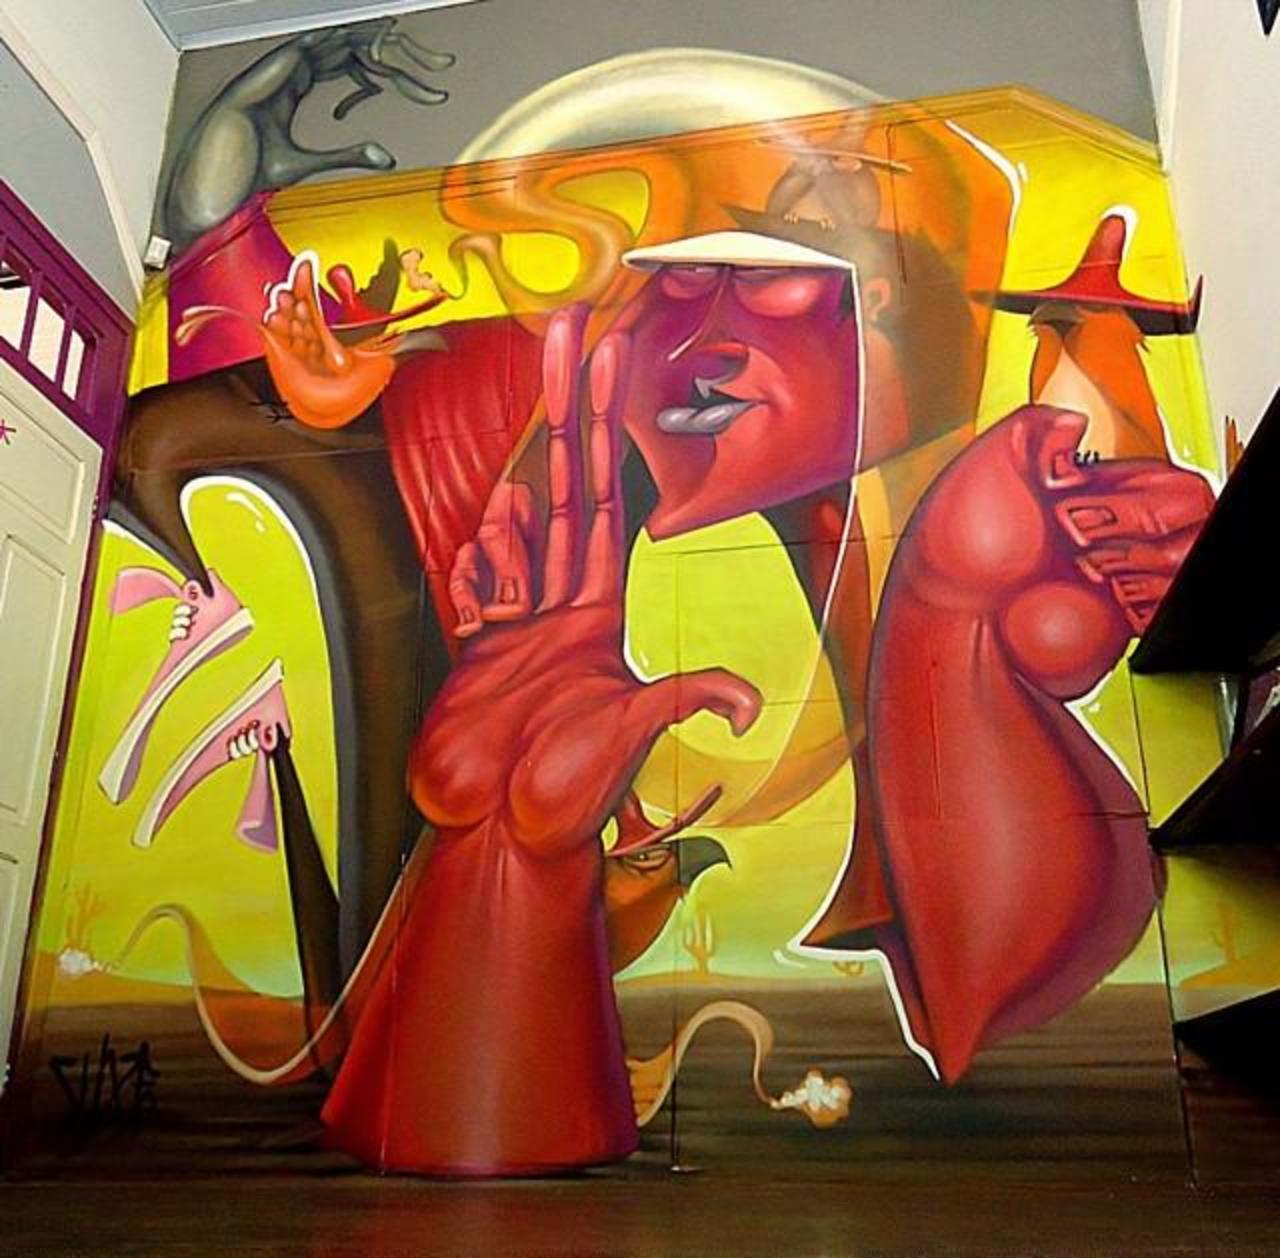 Colourful & vibrant Street Art mural by lel1
#art #arte #graffiti #streetart http://t.co/jUERSl2POQ